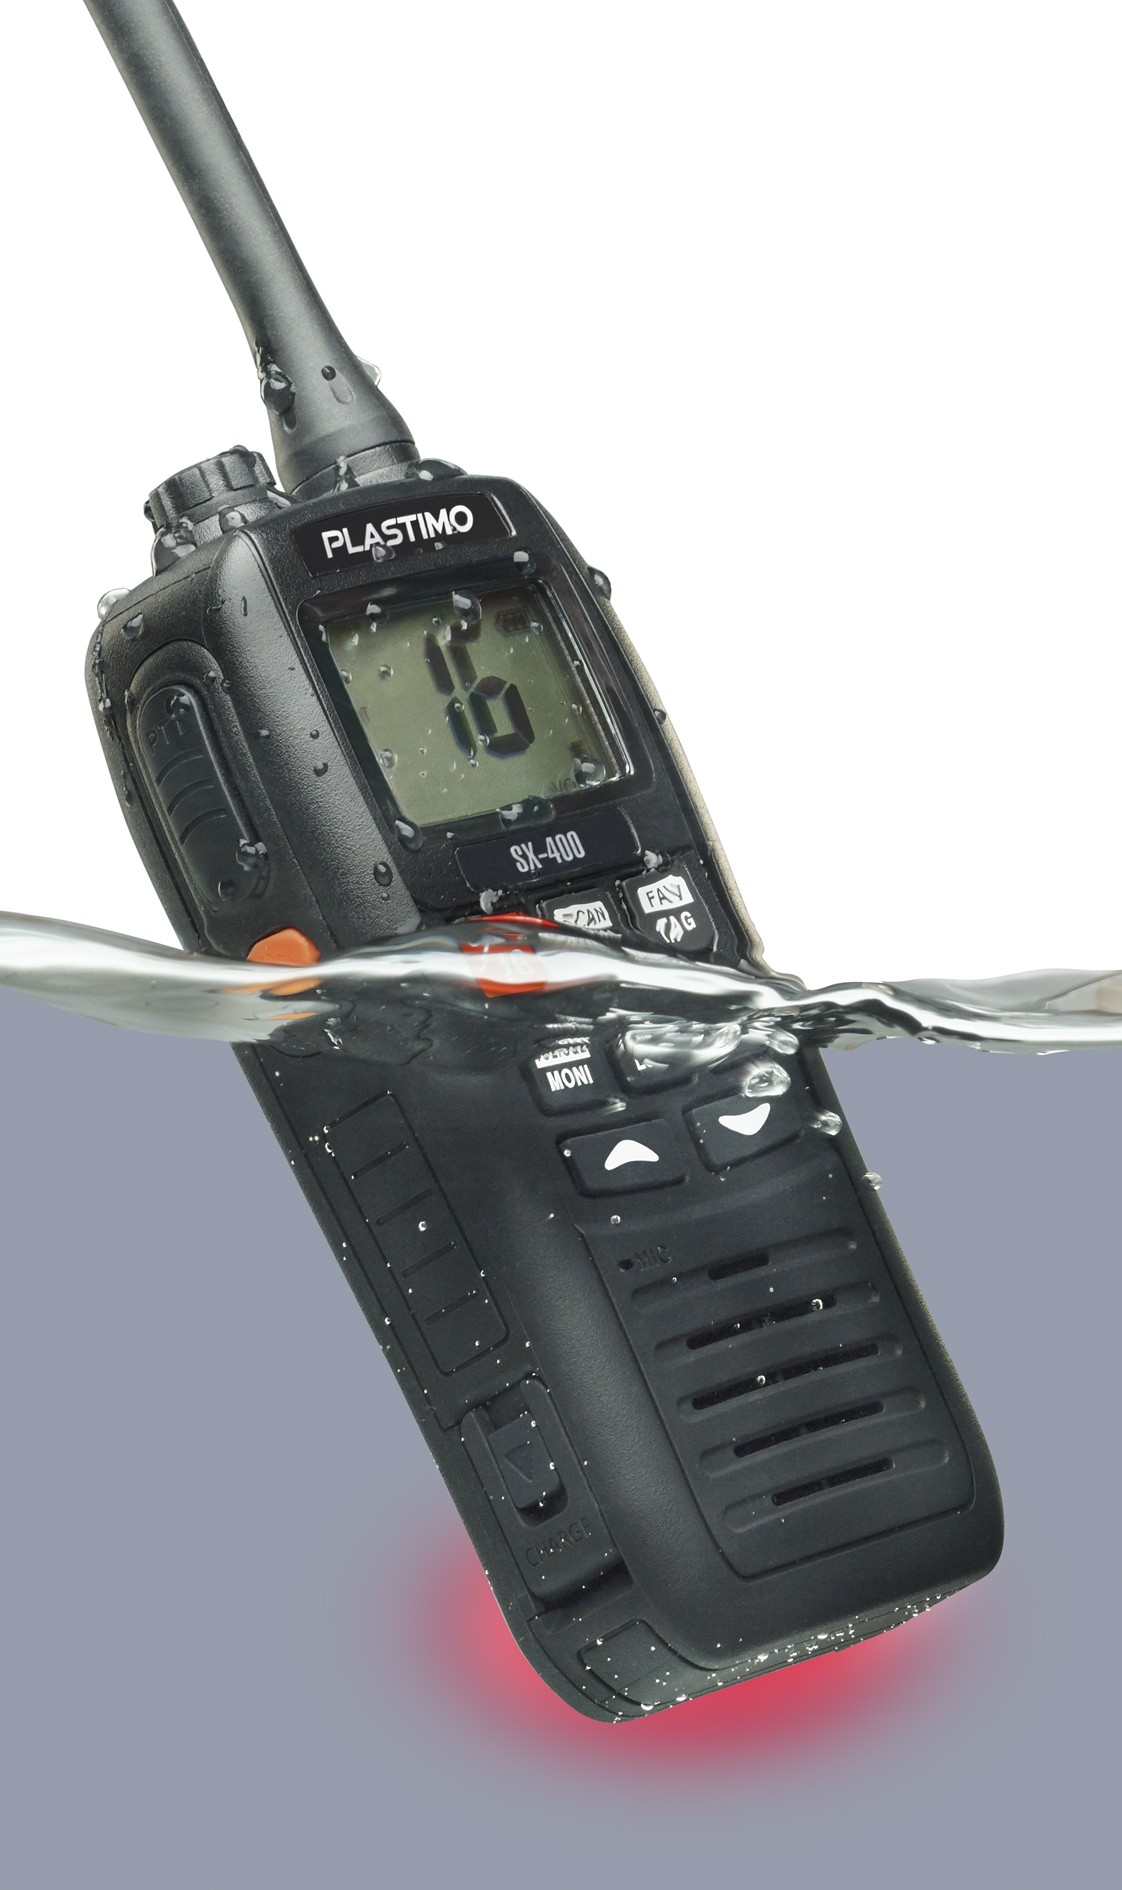 VHF PORTABLE SX-400 - PLASTIMO